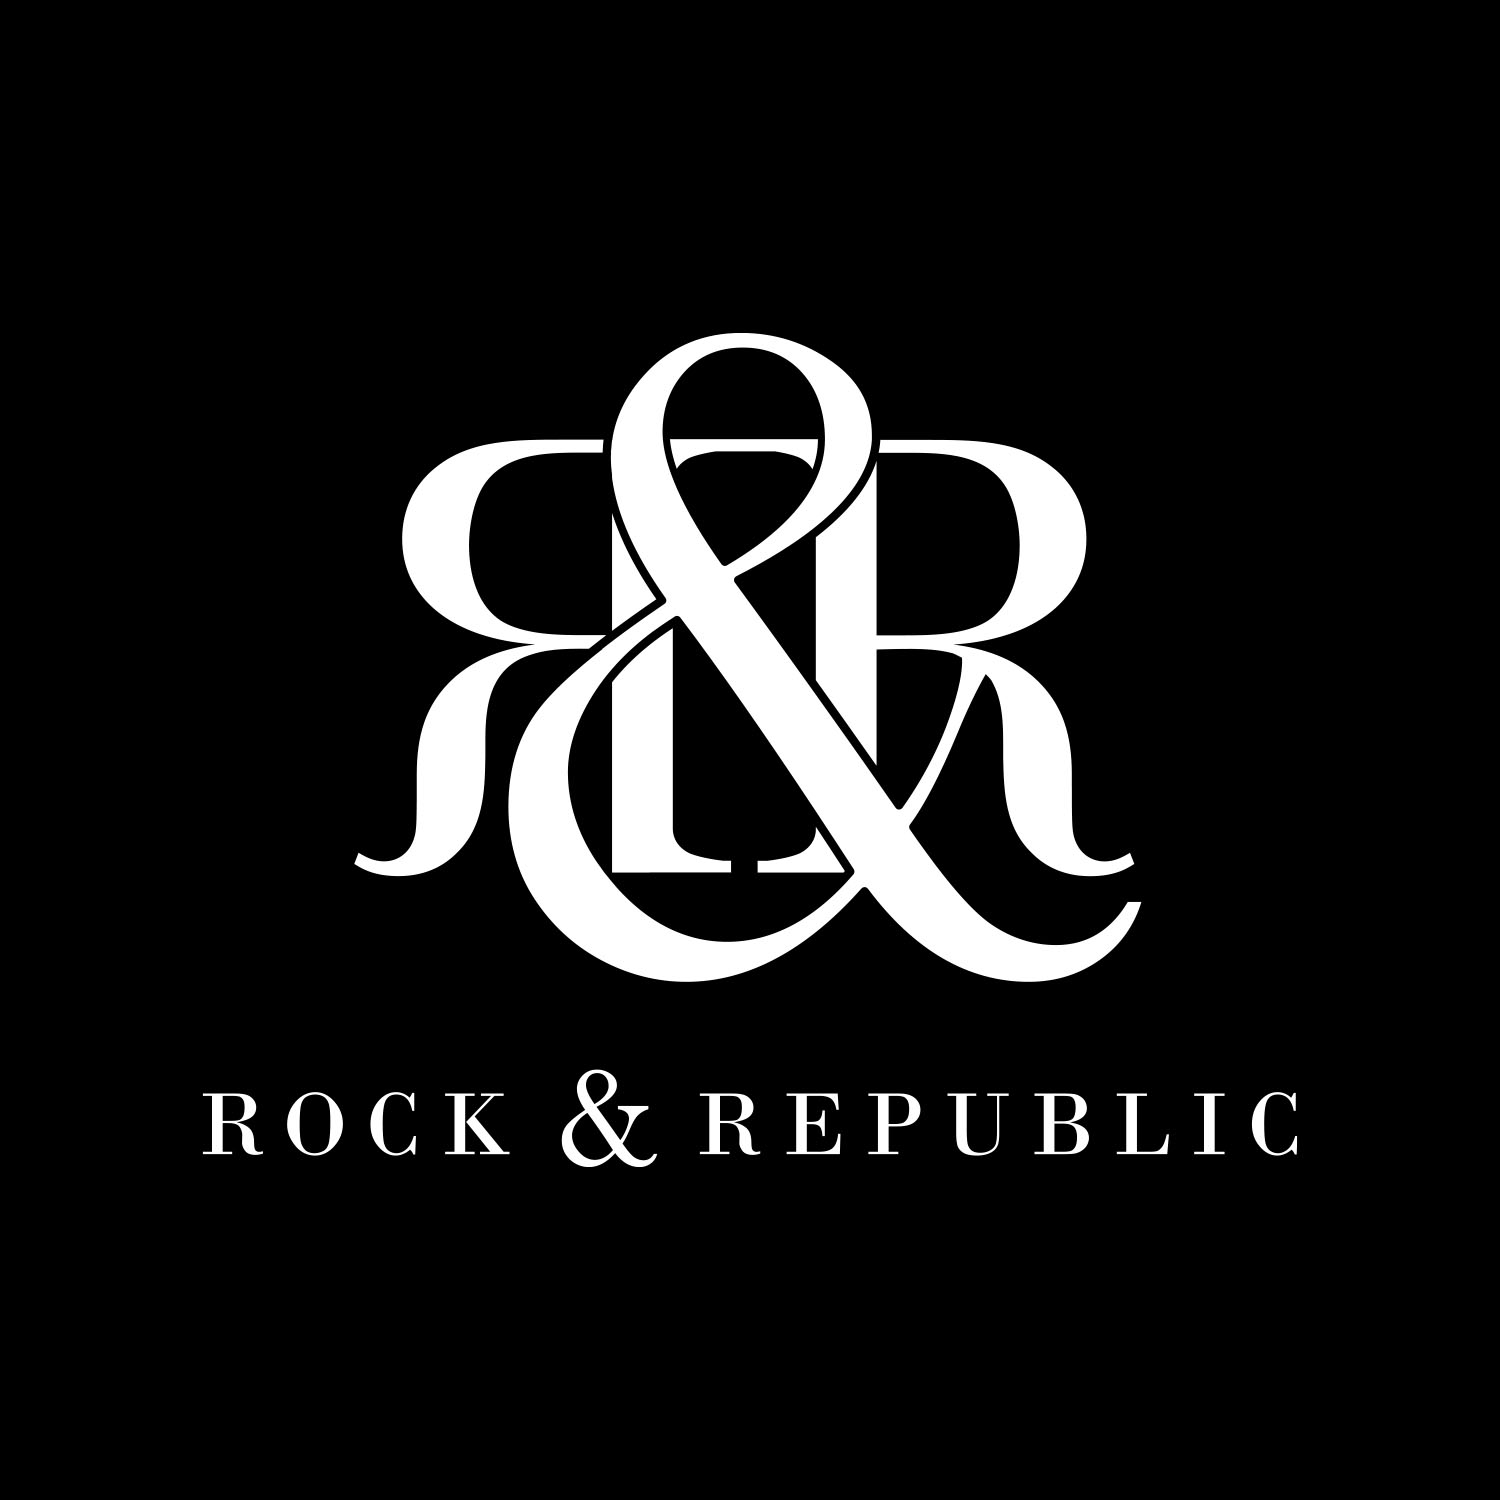 Rock & Republic